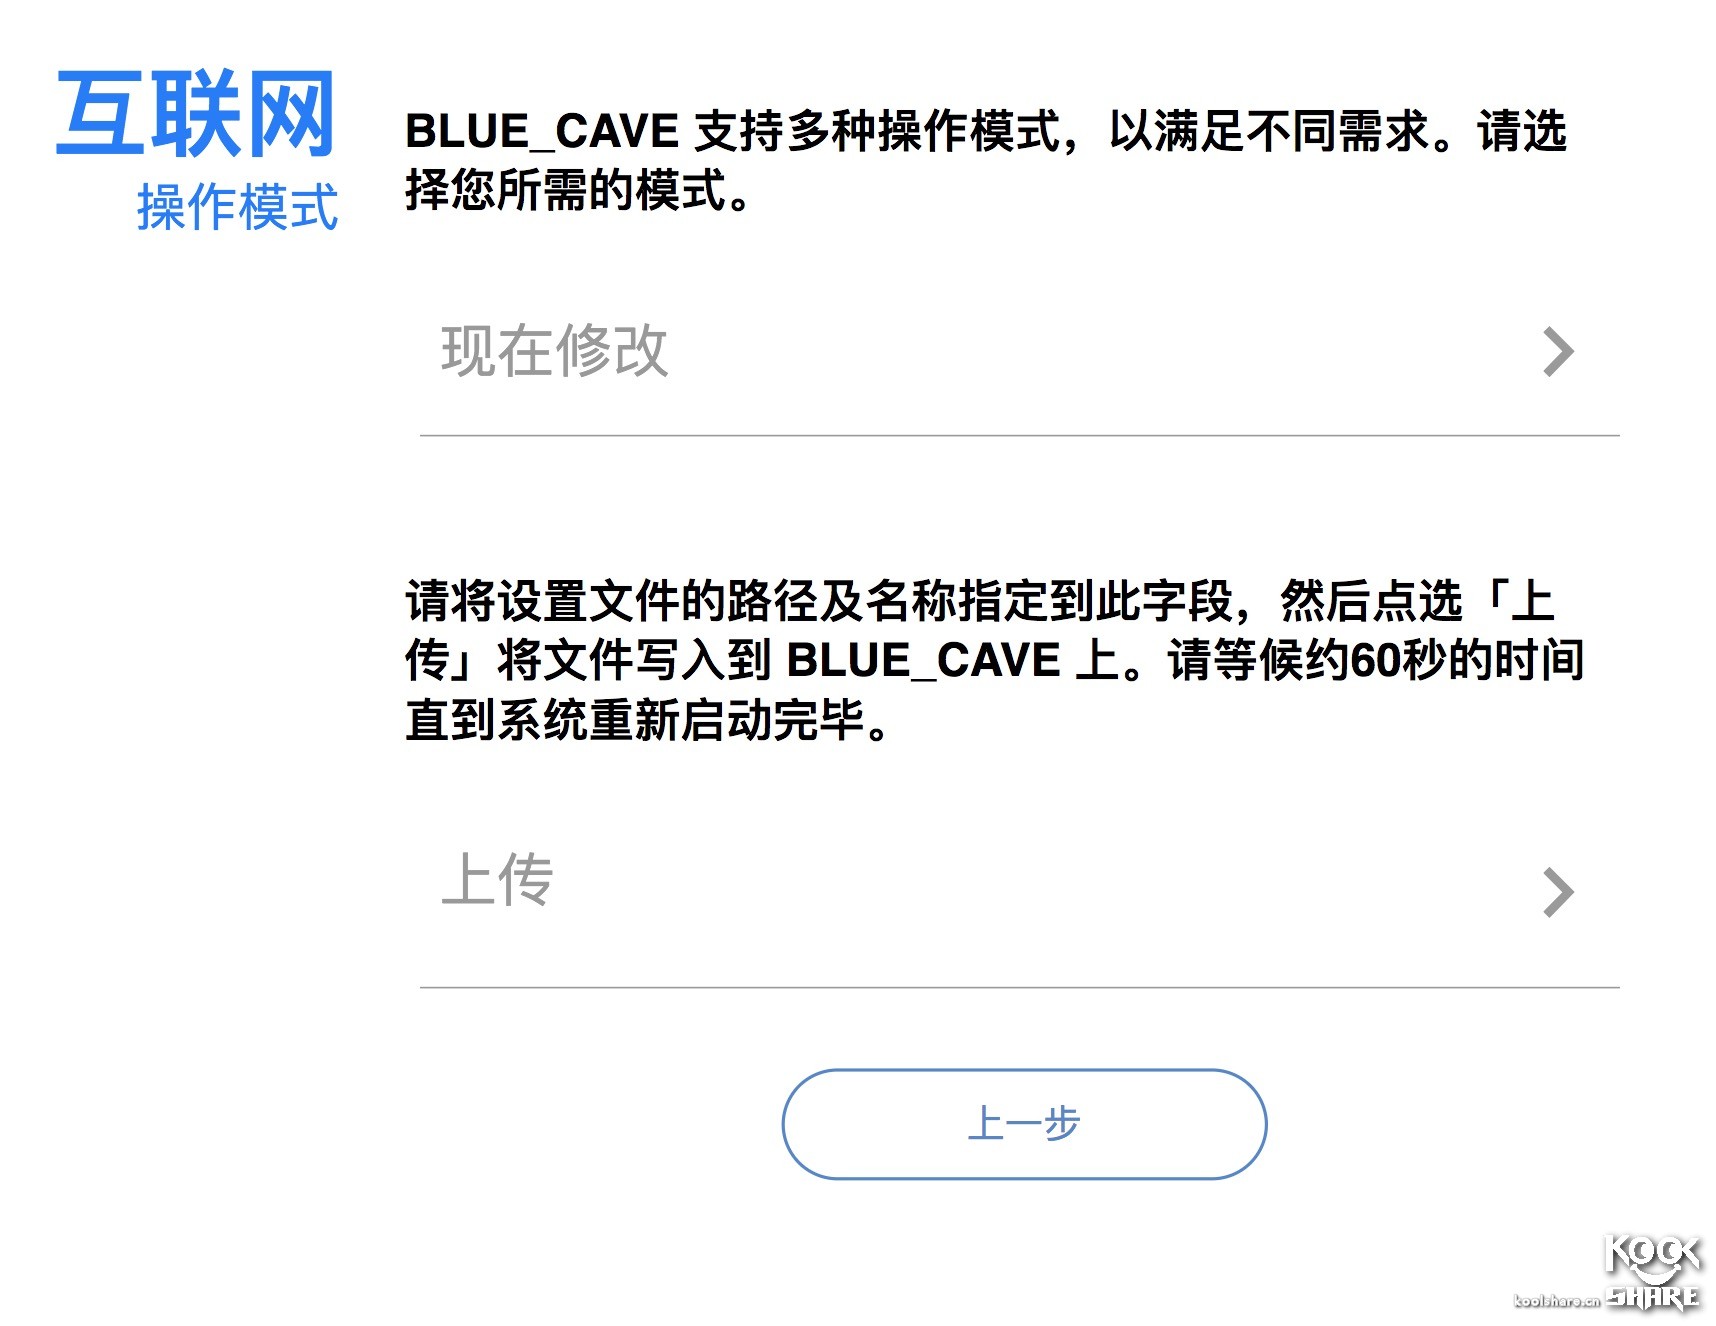 Asus 华硕 Blue Cave AC2600规格 无线路由器 开箱拆解评测